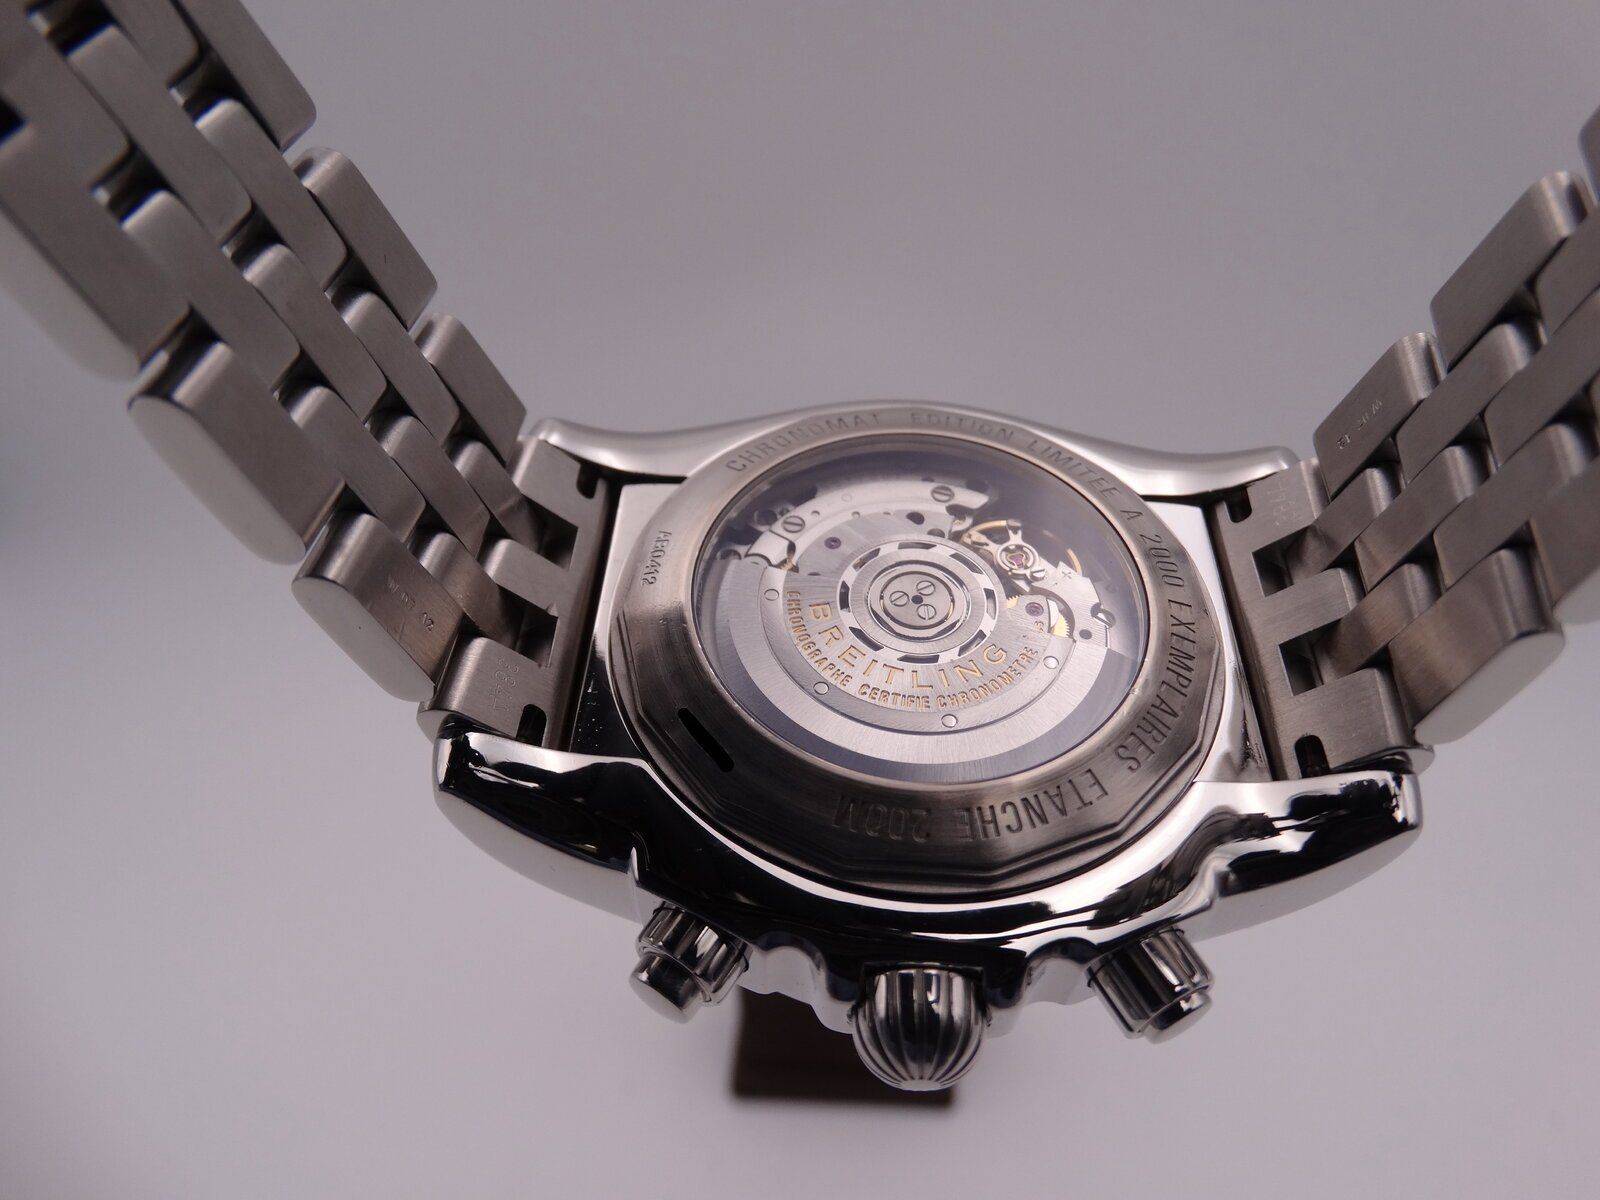 Breitling Chronomat GMT Chronograph Limited Edition 7974 copia.JPG